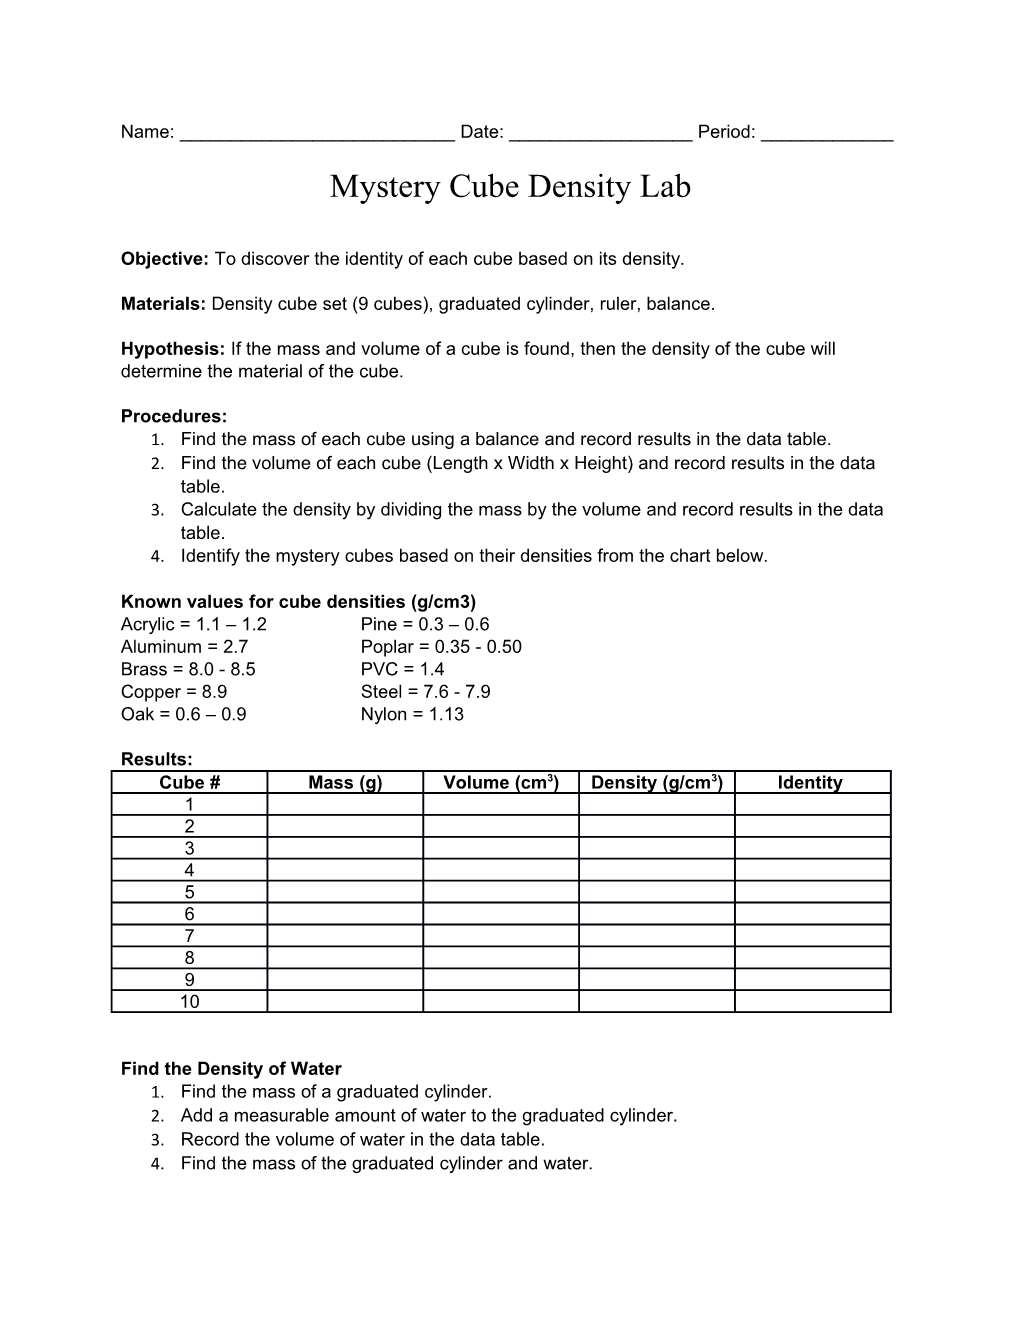 Mystery Cube Density Lab